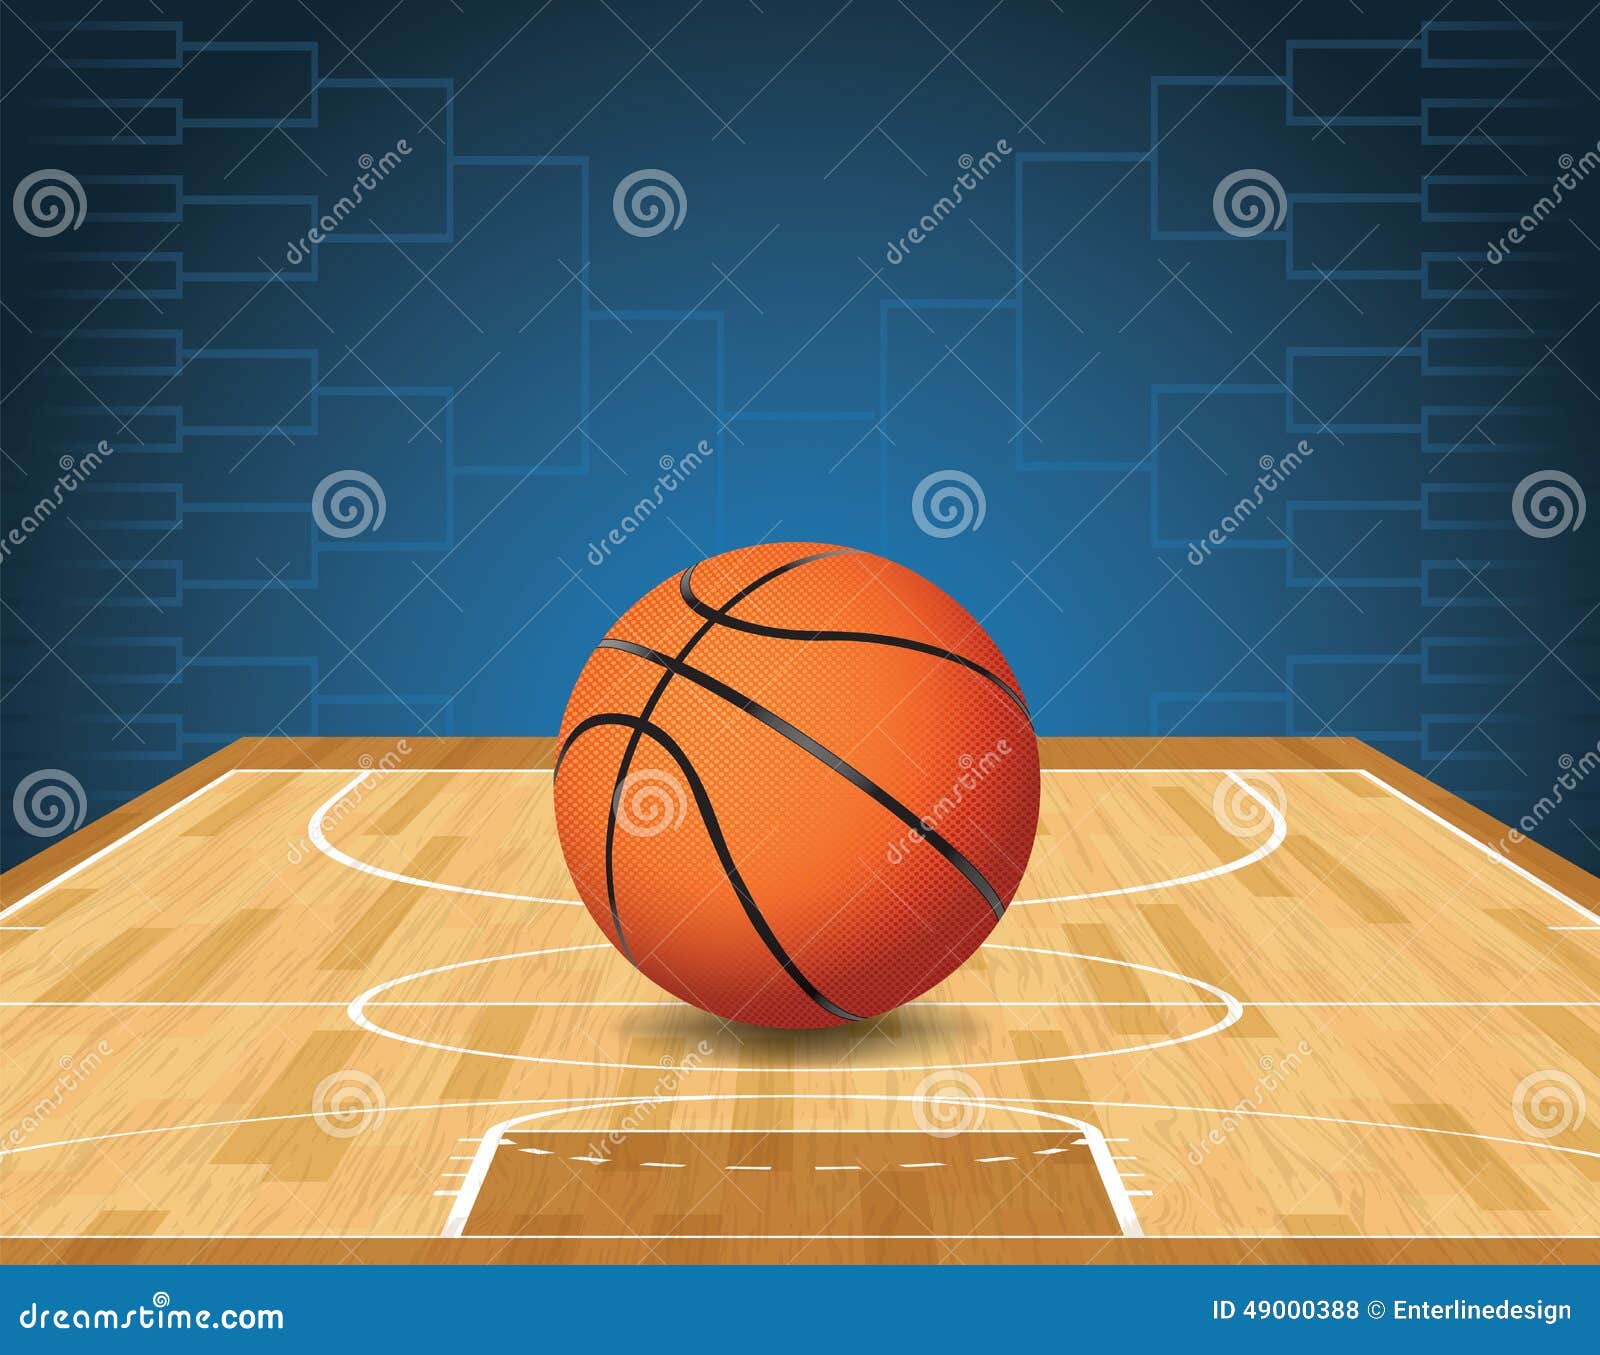 basketball court and ball tournament 